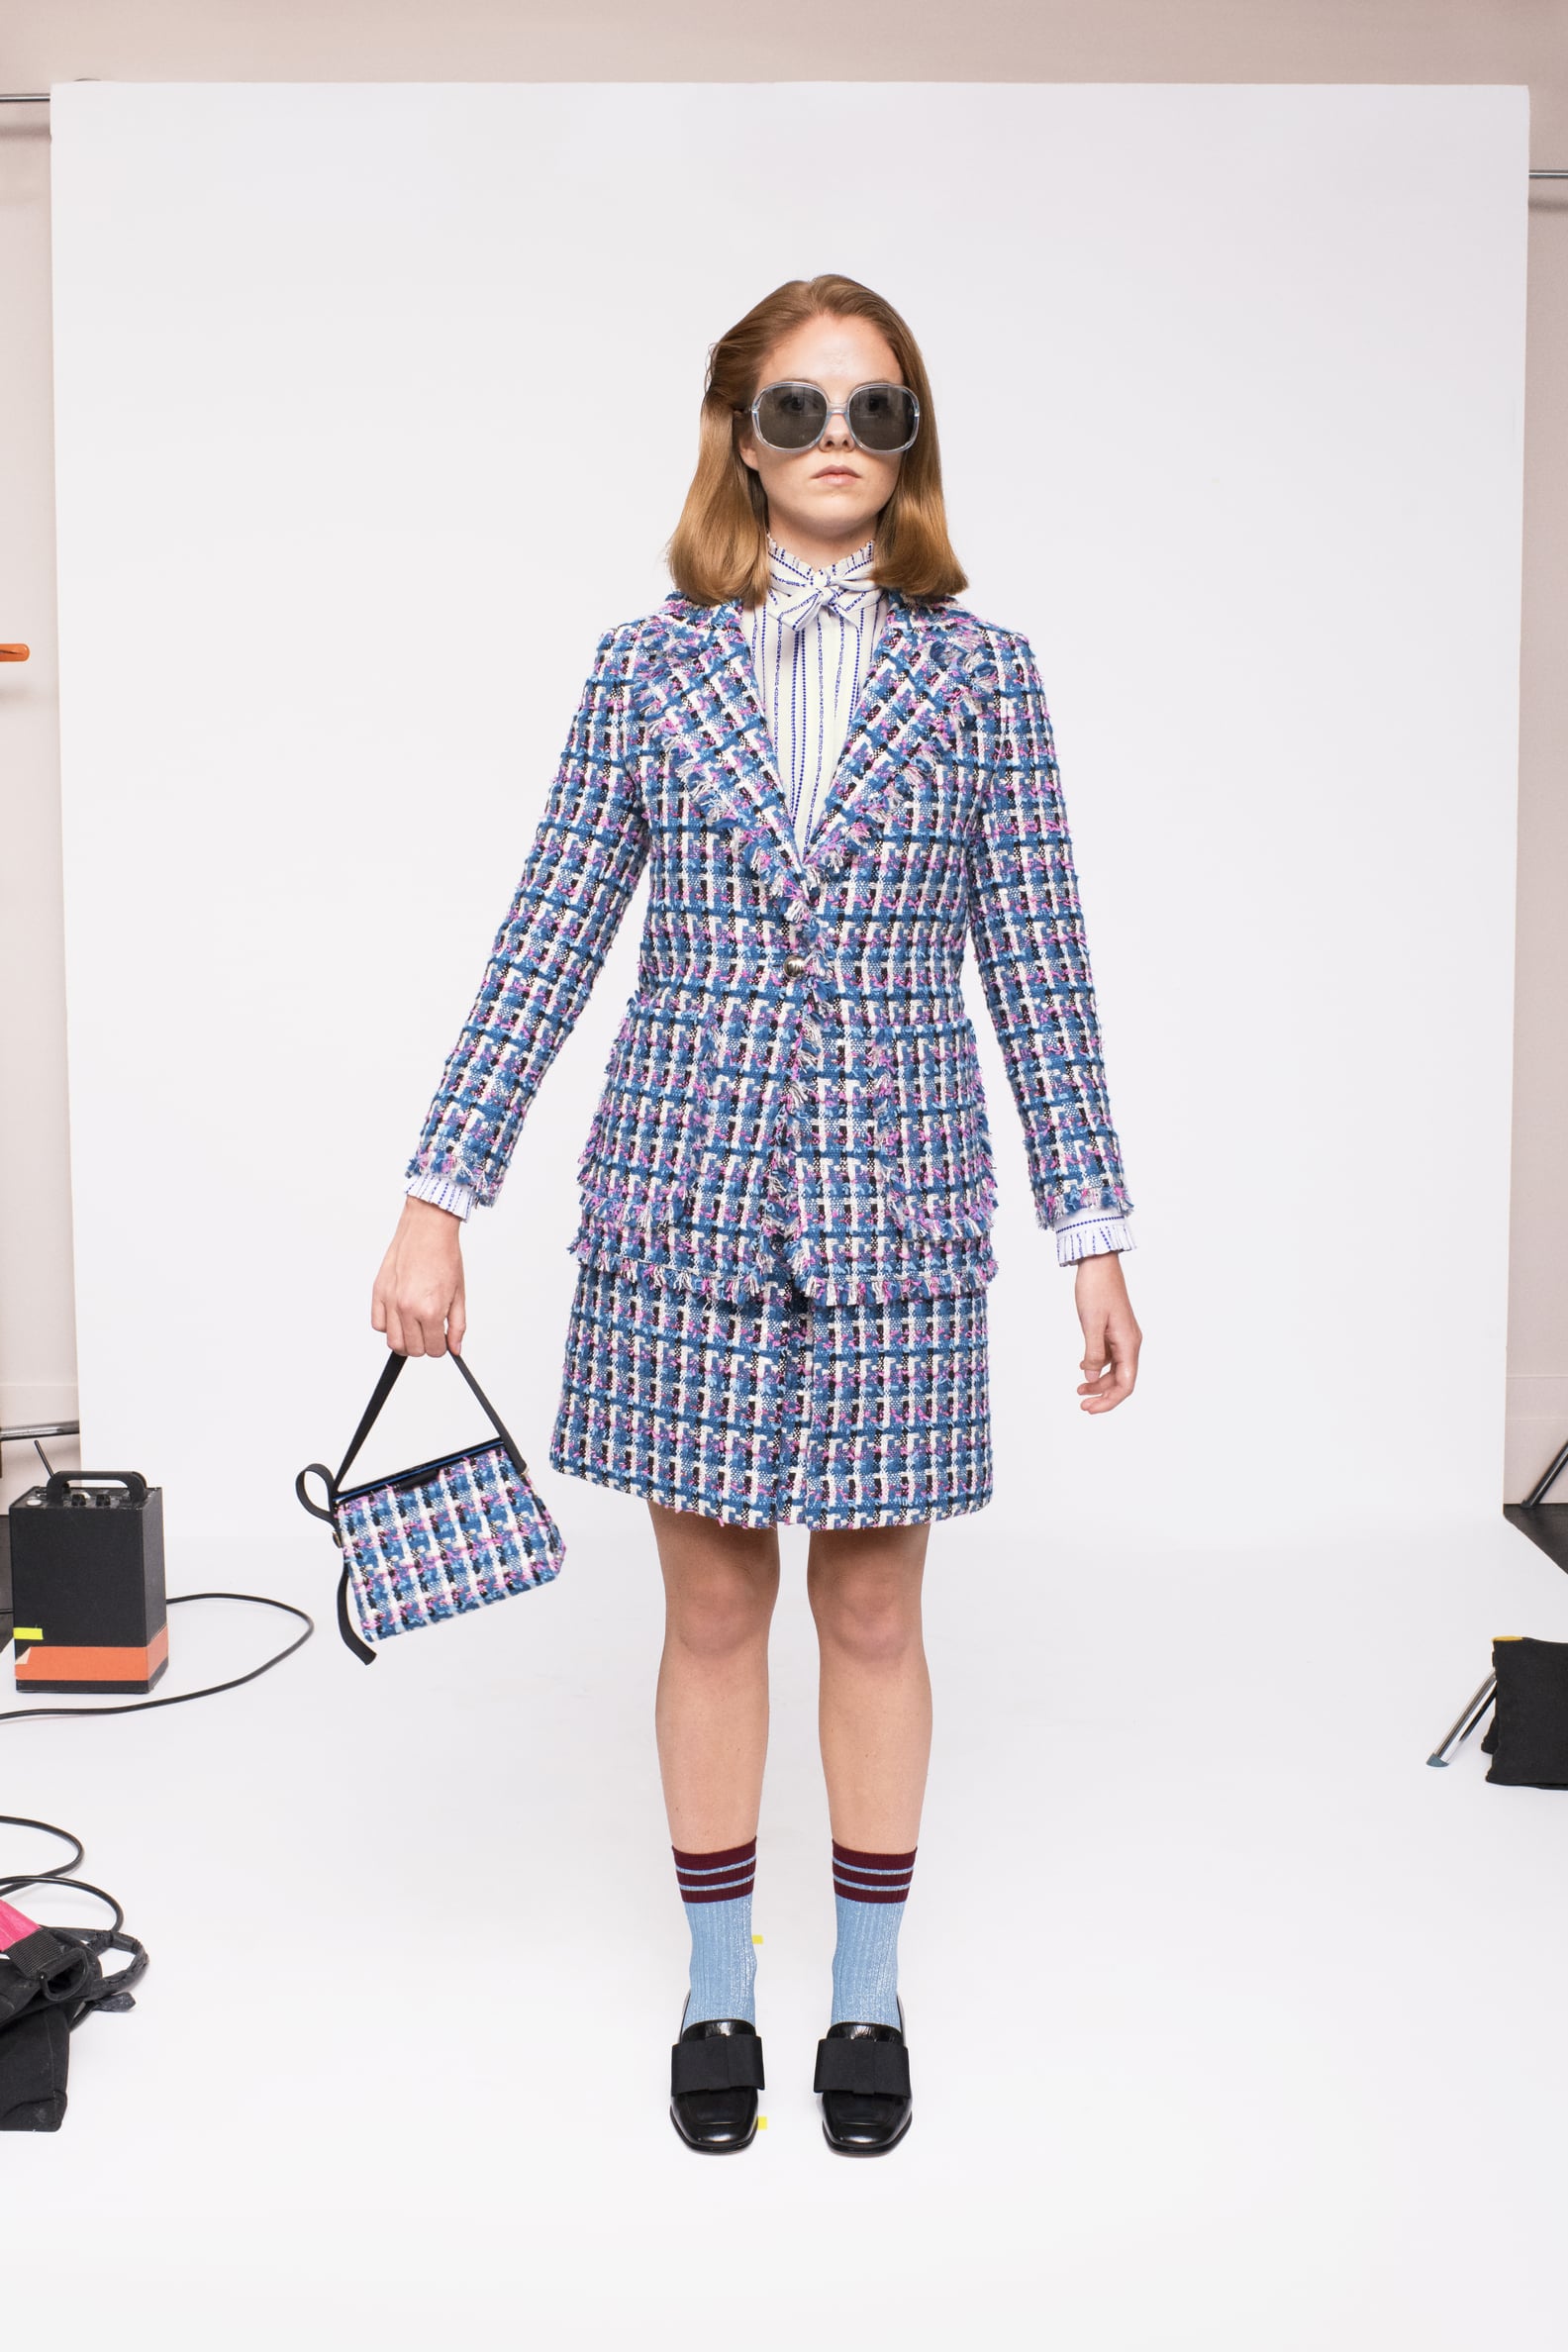 Kate Spade New York's Fall 2020 Collection | POPSUGAR Fashion